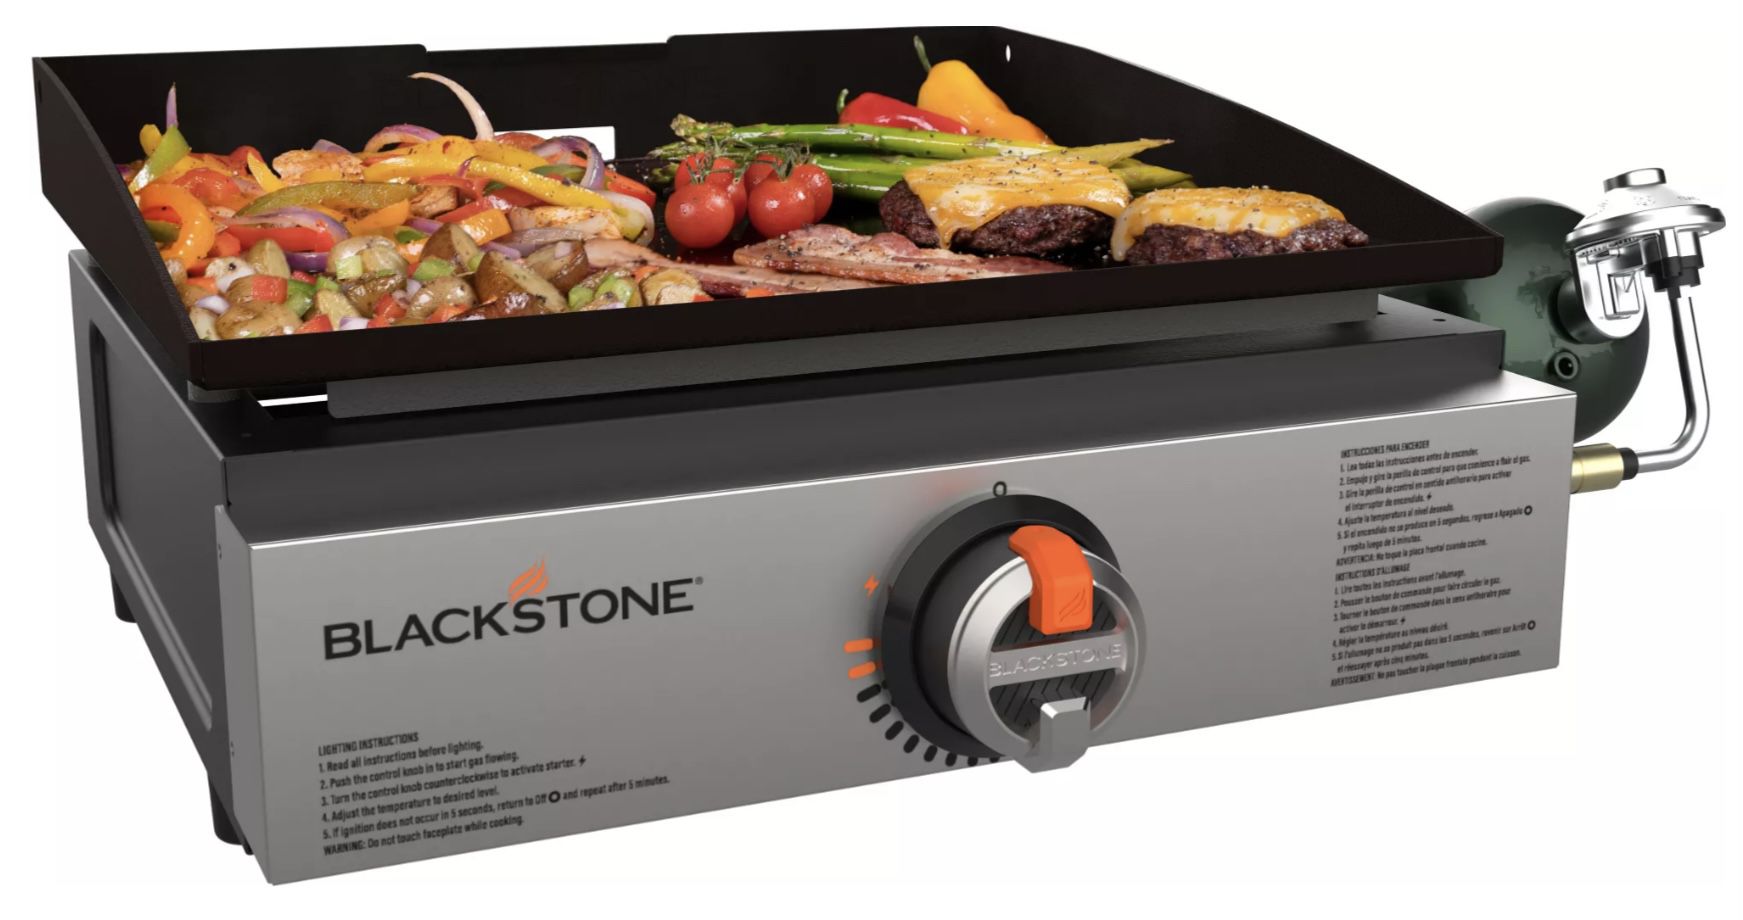 Blackstone 17" Tabletop Griddle Gas Grill 2142 - Black .